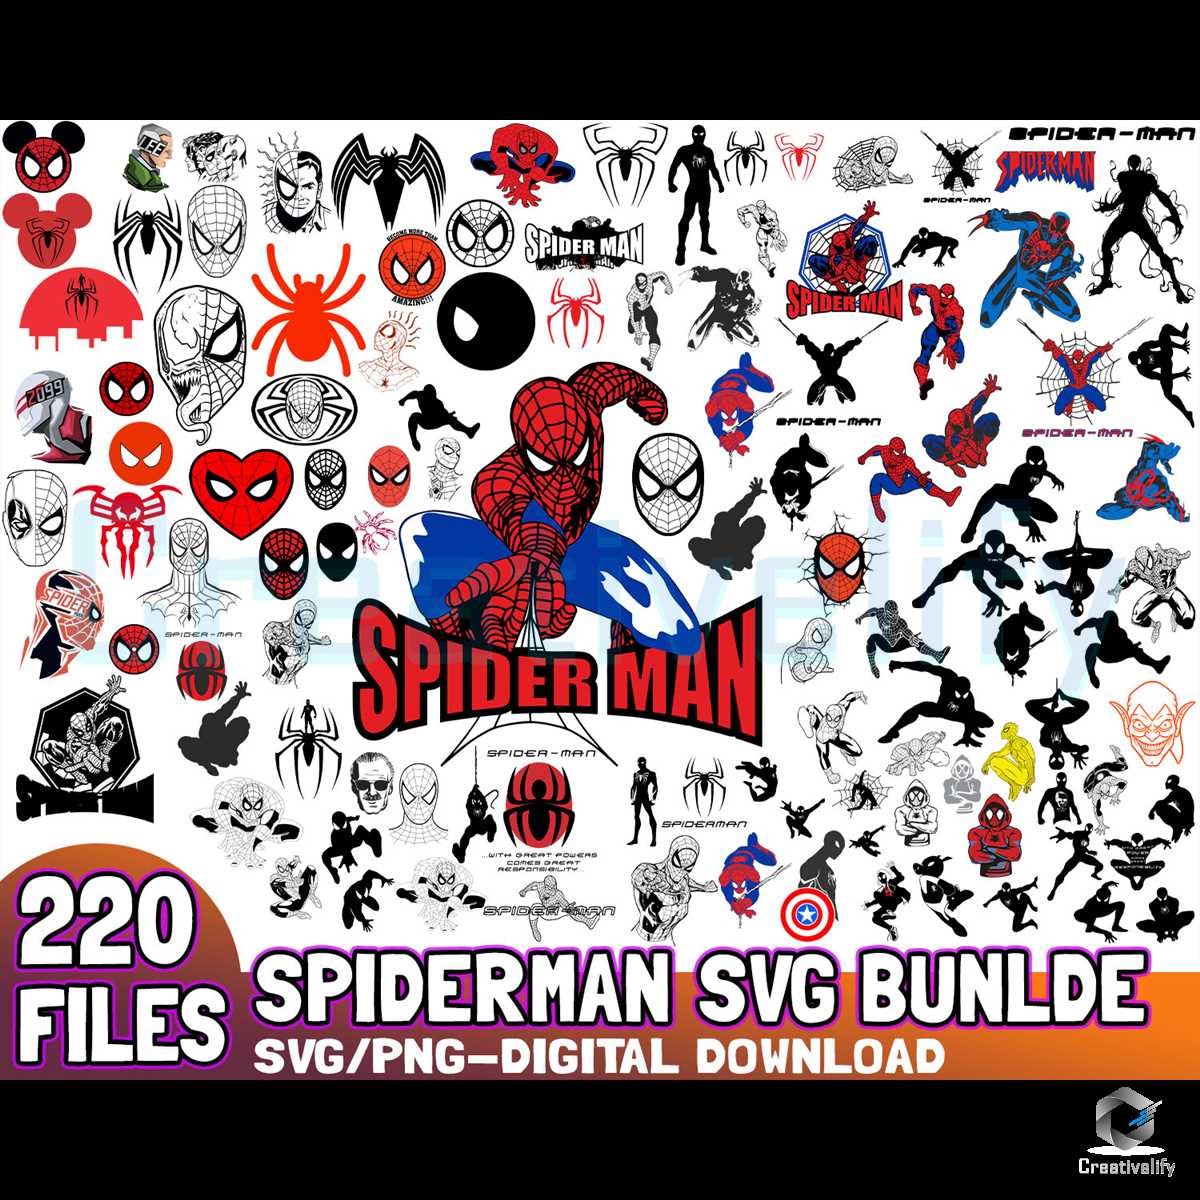 220 Files Spiderman SVG Bunlde Digital Download - CreativeLify